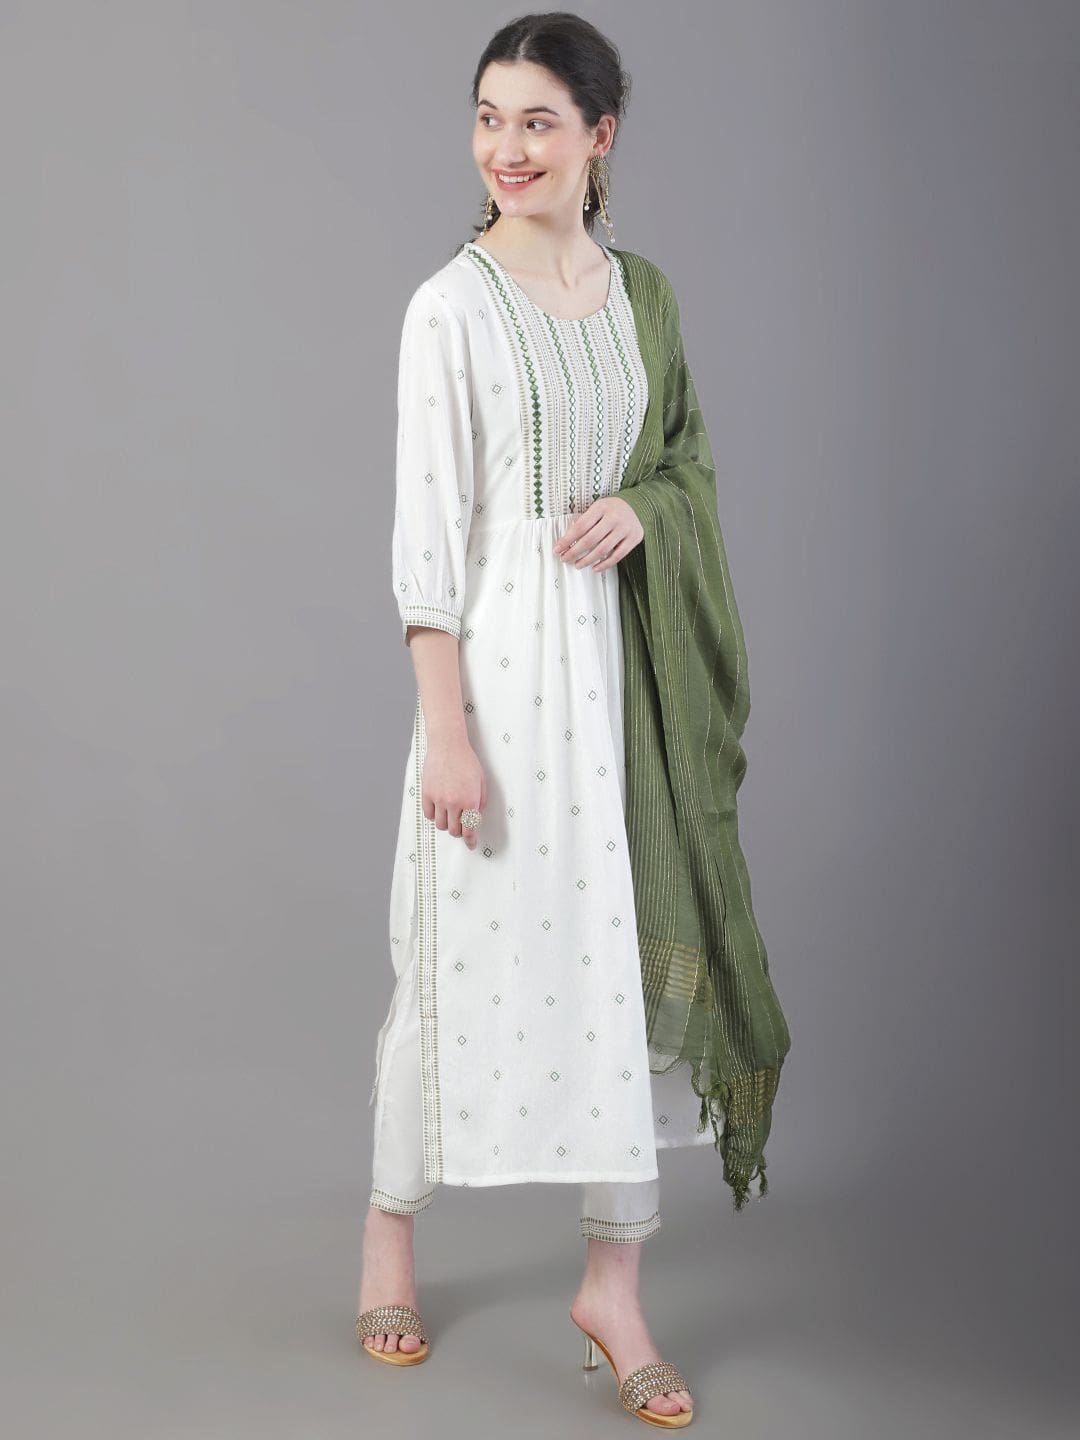 Classy White And Green Rayon Kurti For Women